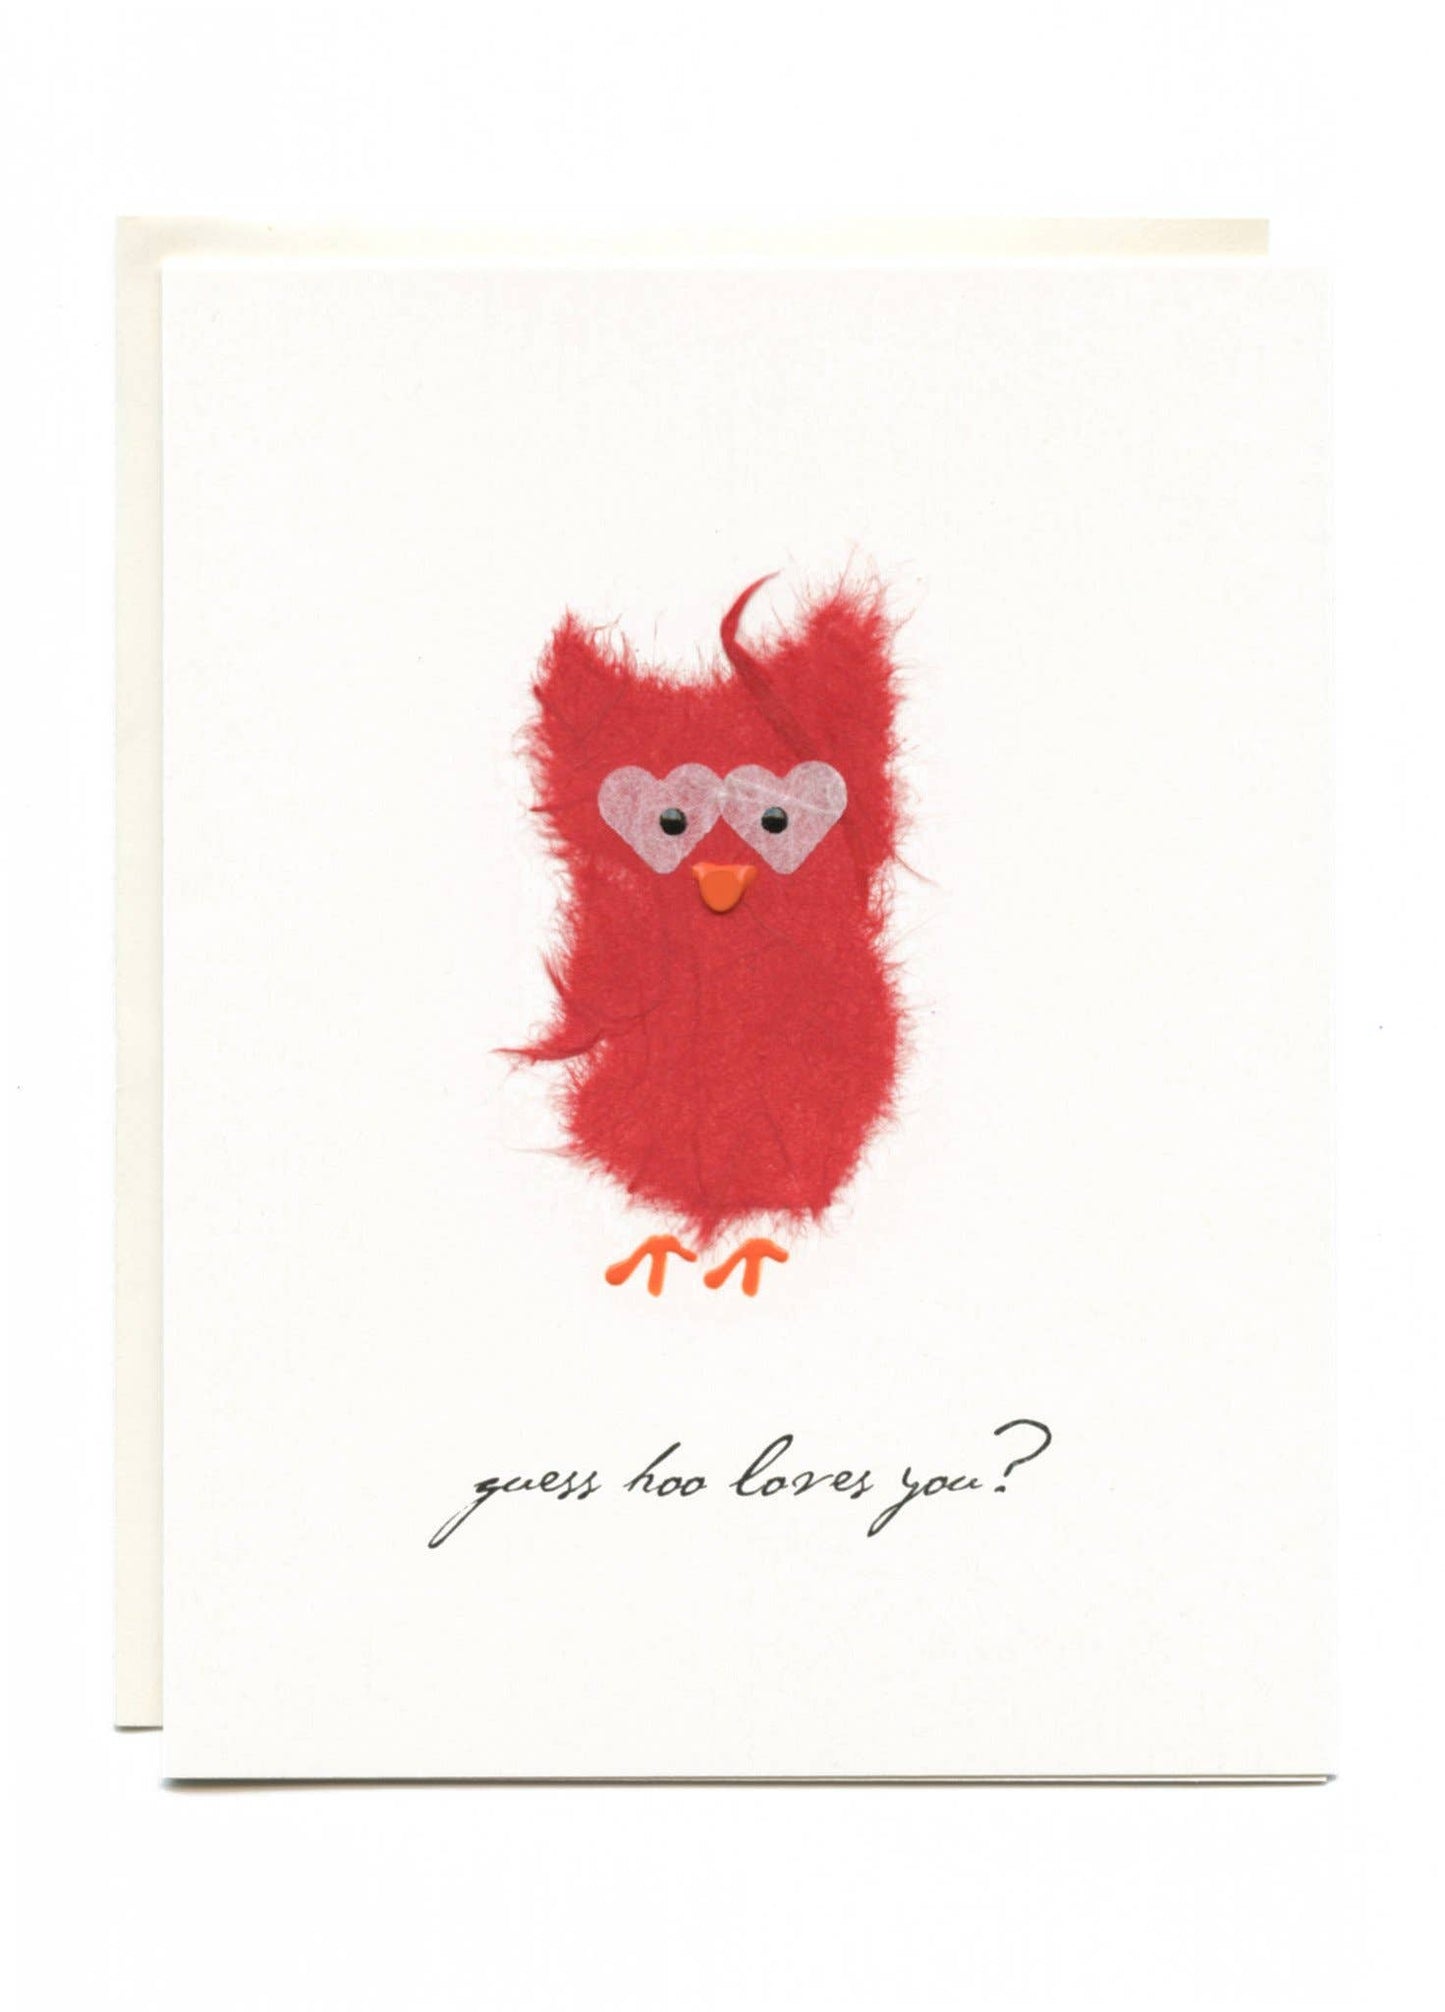 Guess Hoo Loves You - Owl w/ Heart Eyes